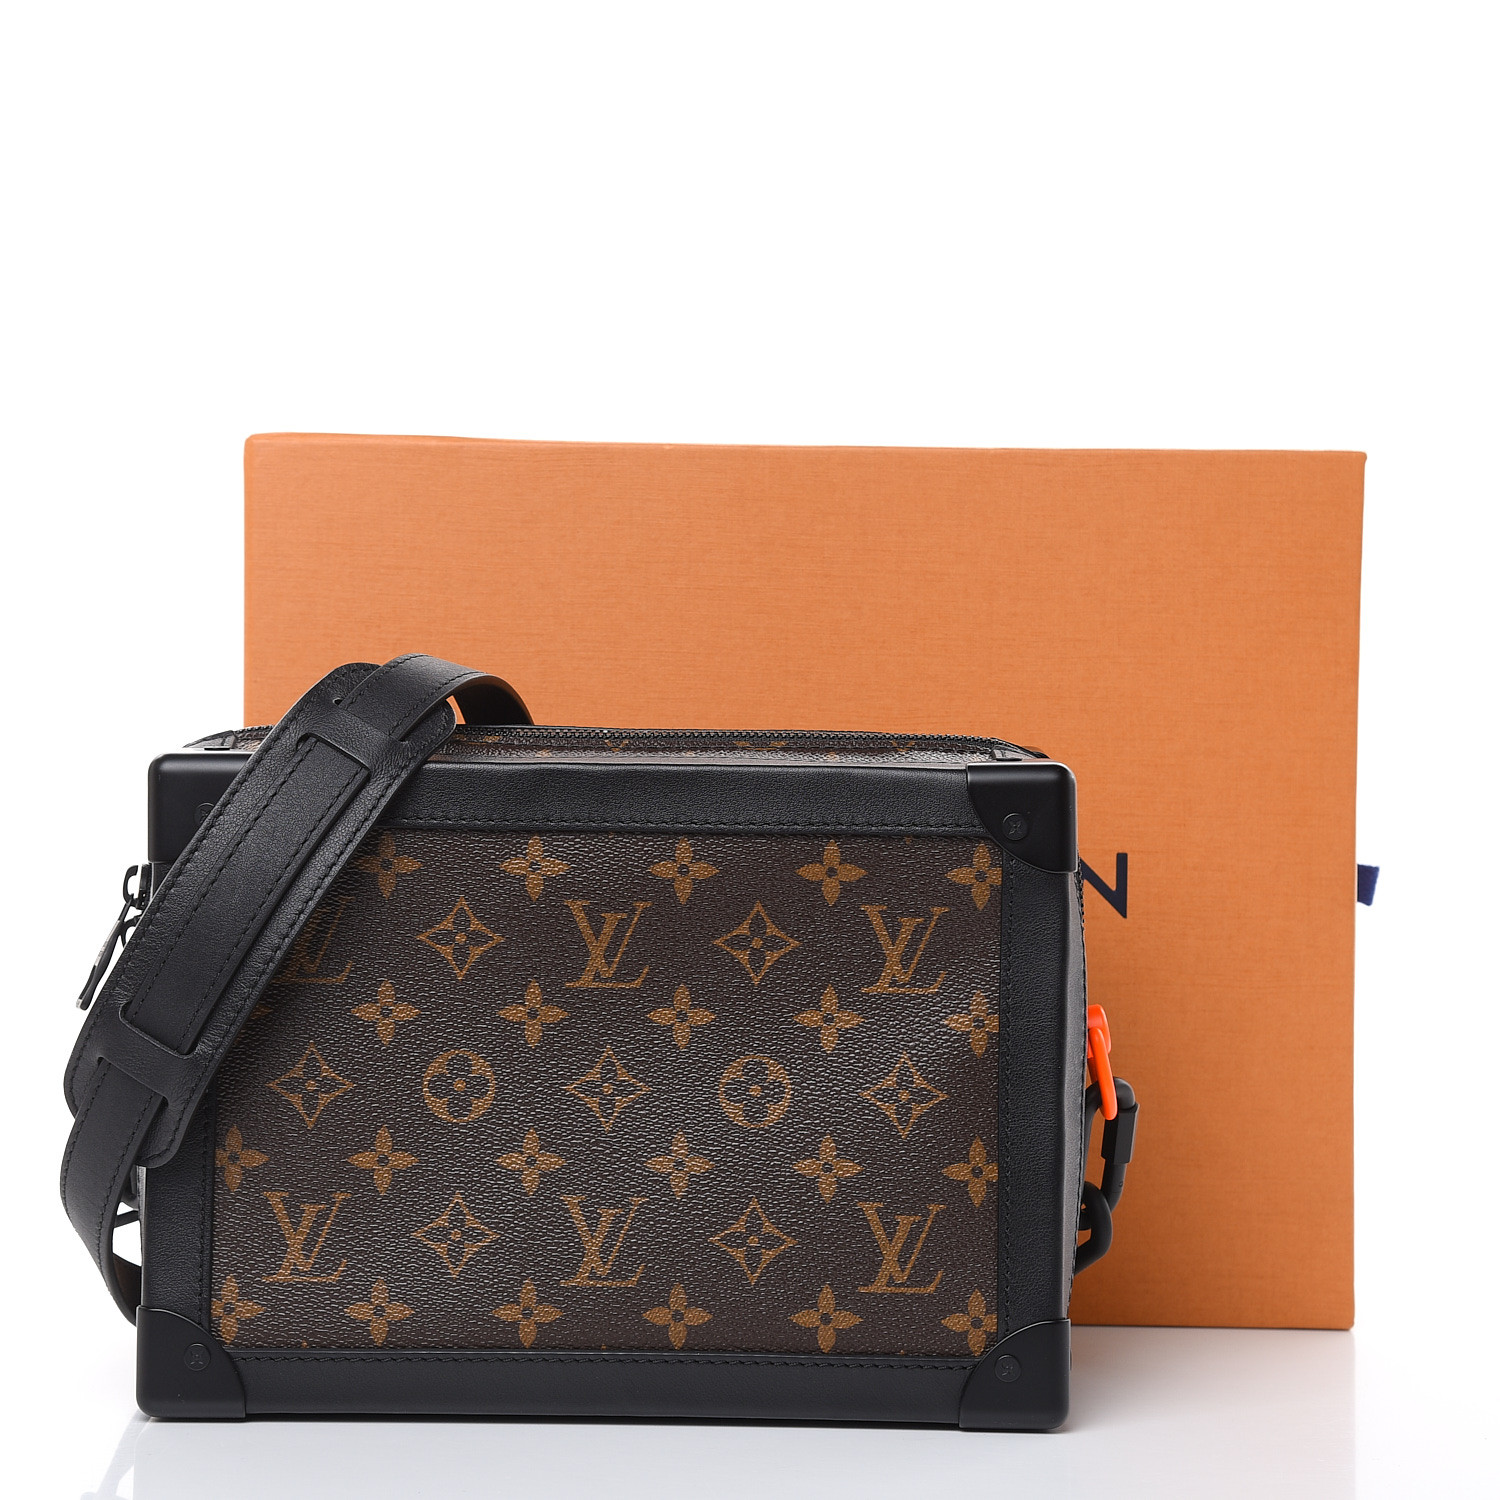 NEW Louis Vuitton Soft Trunk Prism Monogram Menswear Bag Review